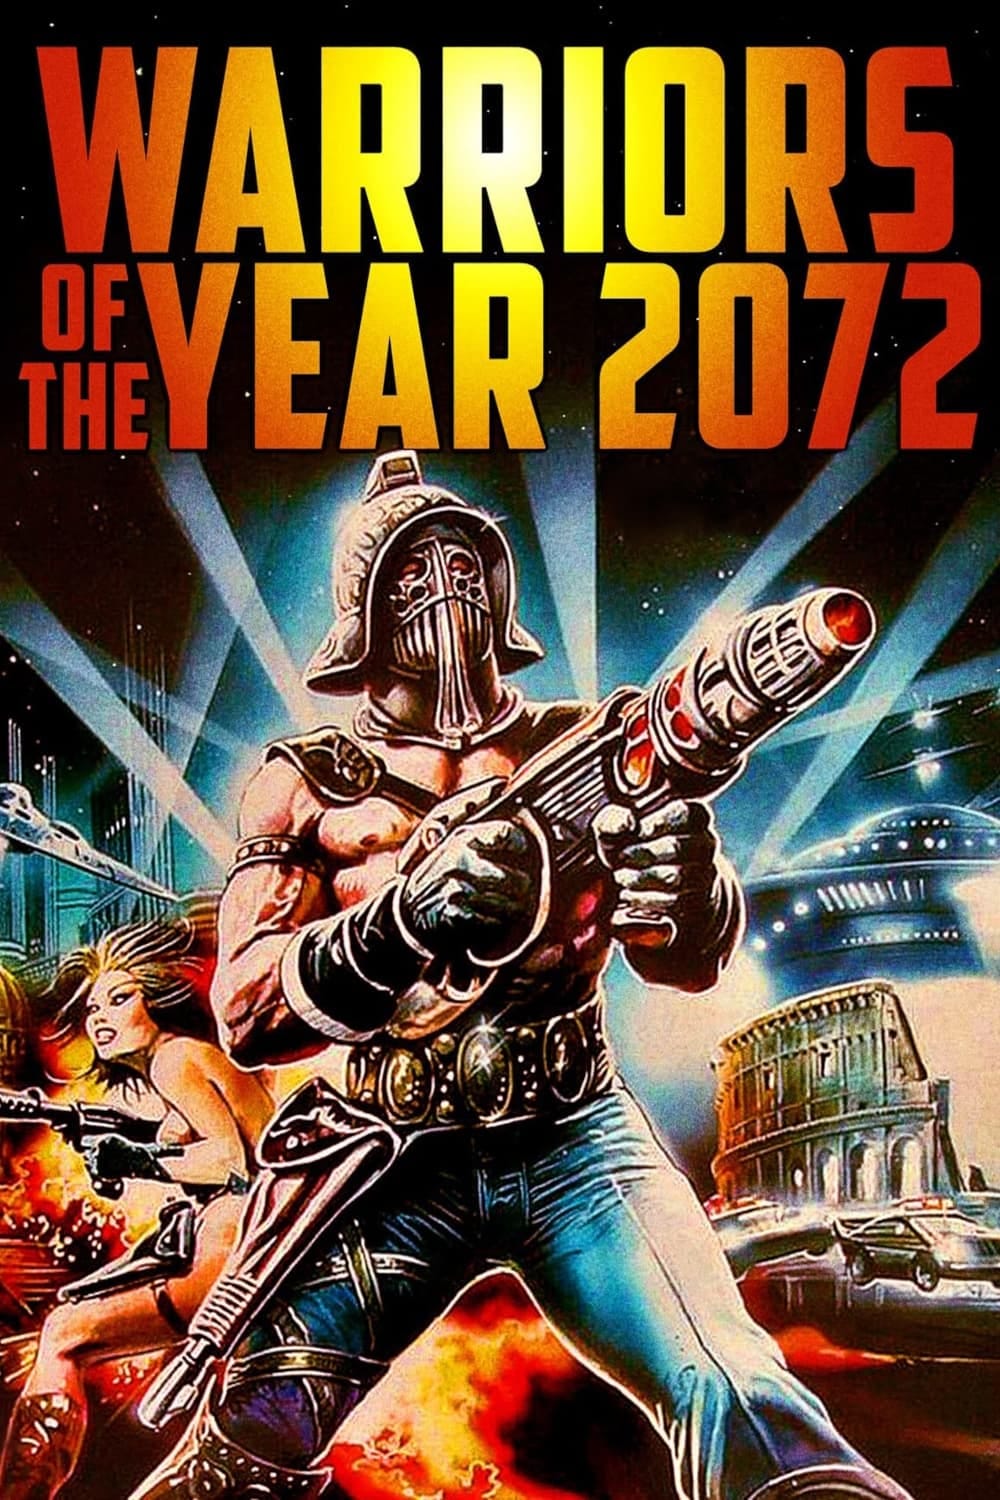 I guerrieri dell'anno 2072 (1984) | Poster